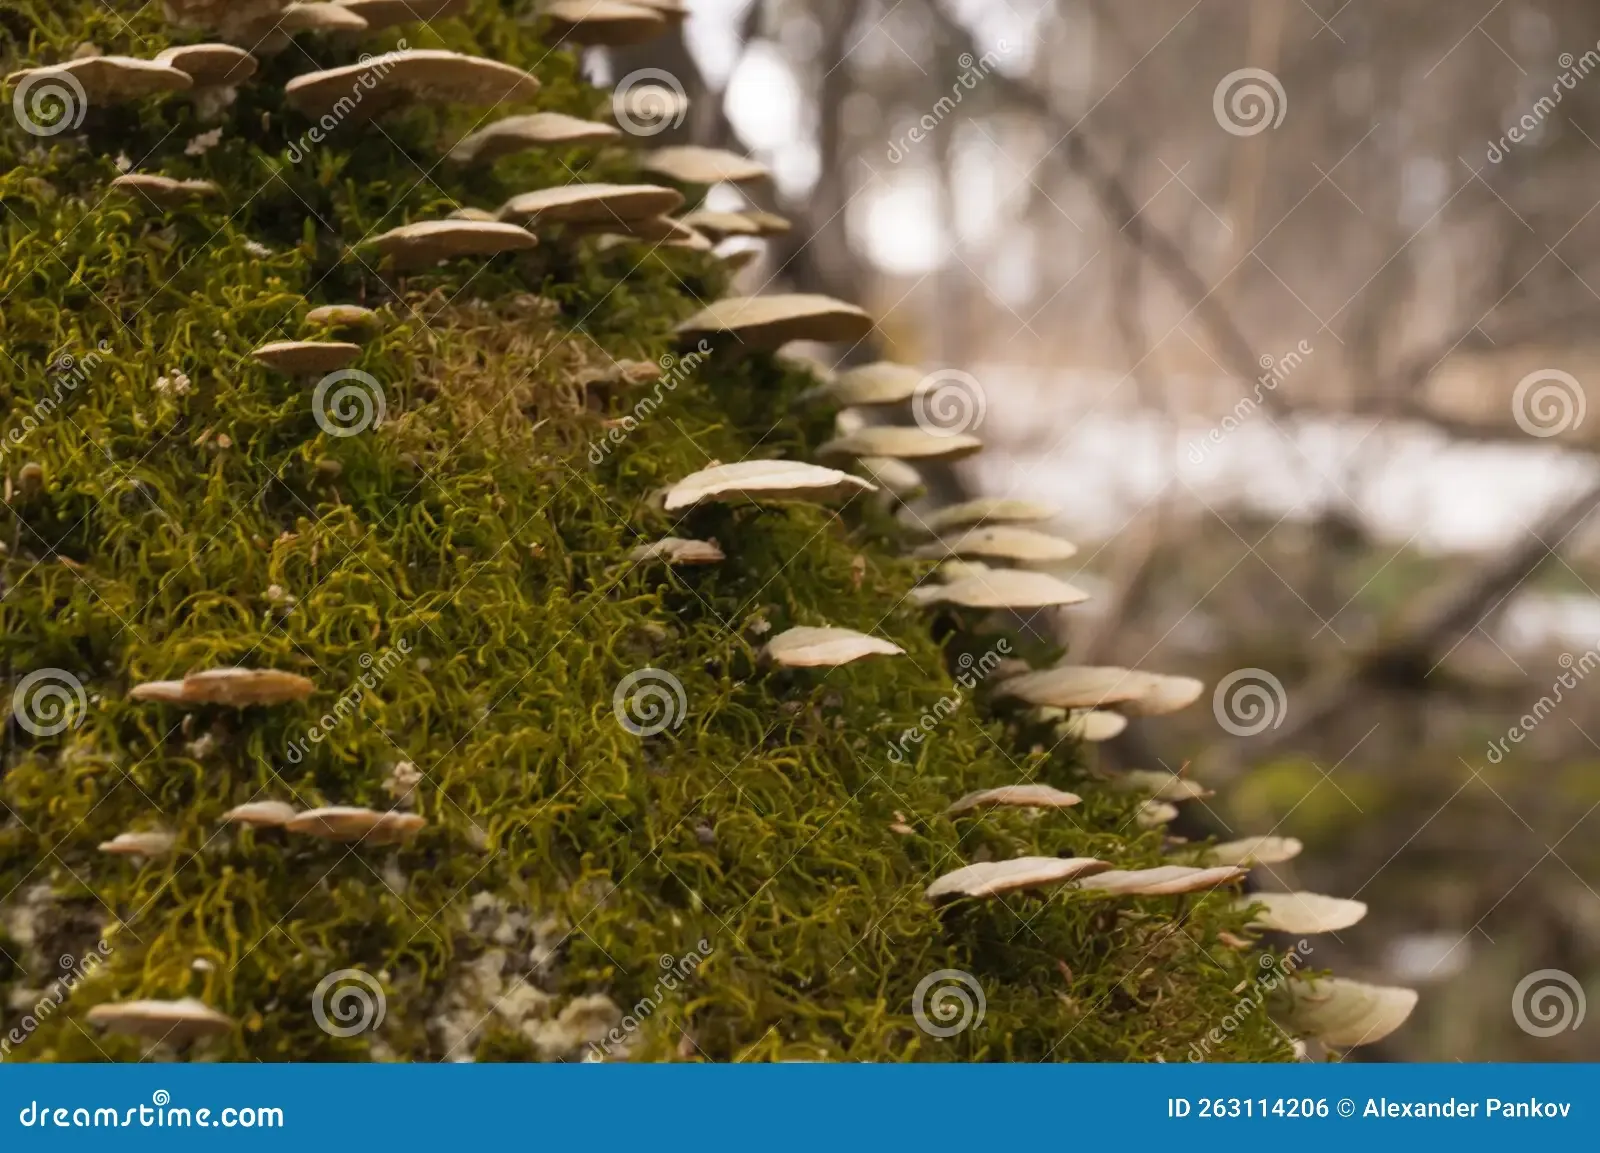 polypore-mushrooms-grow-tree-stump-covered-green-moss-maybe-trametes-gibbosa-263114206.jpg